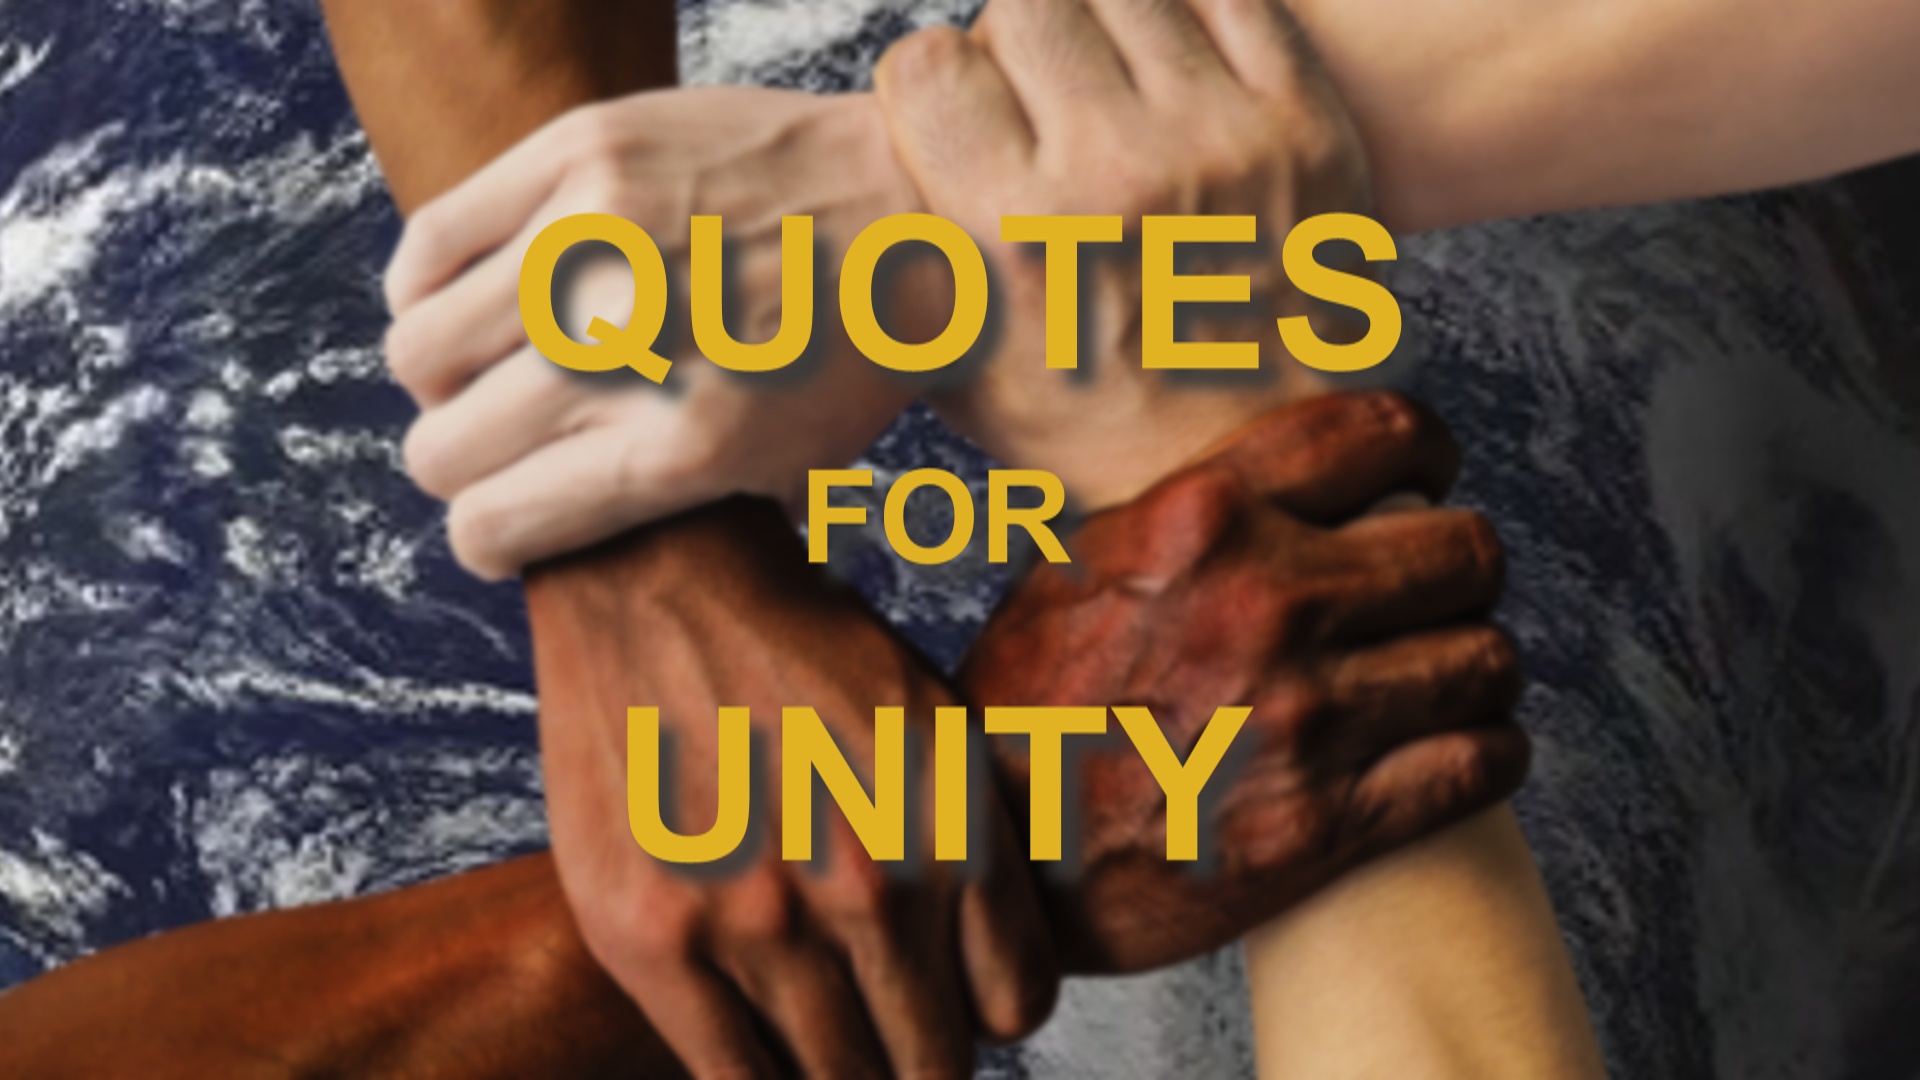 team unity quotes